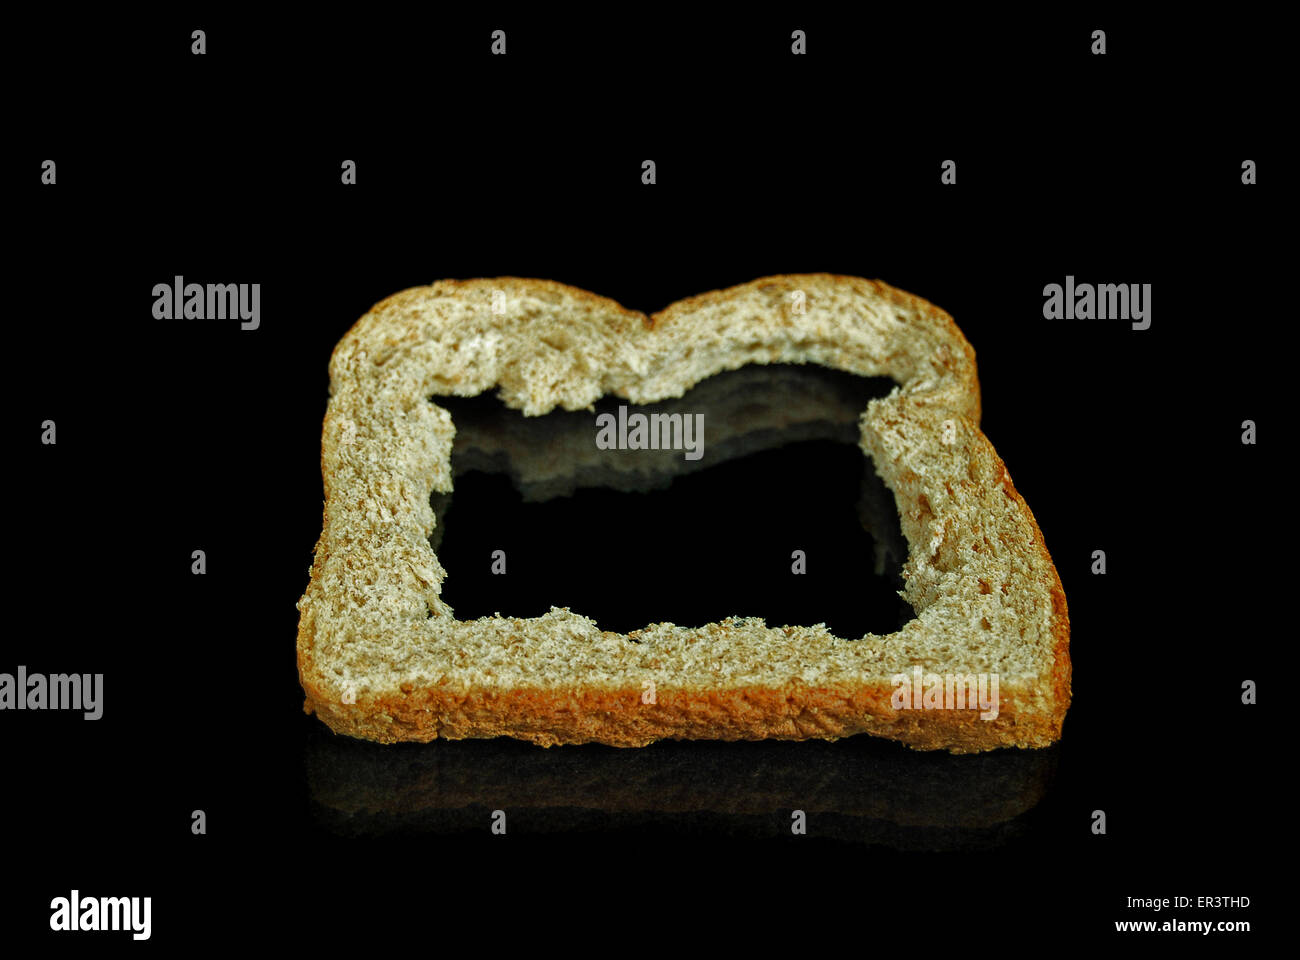 Bread crust on a mirror. Stock Photo